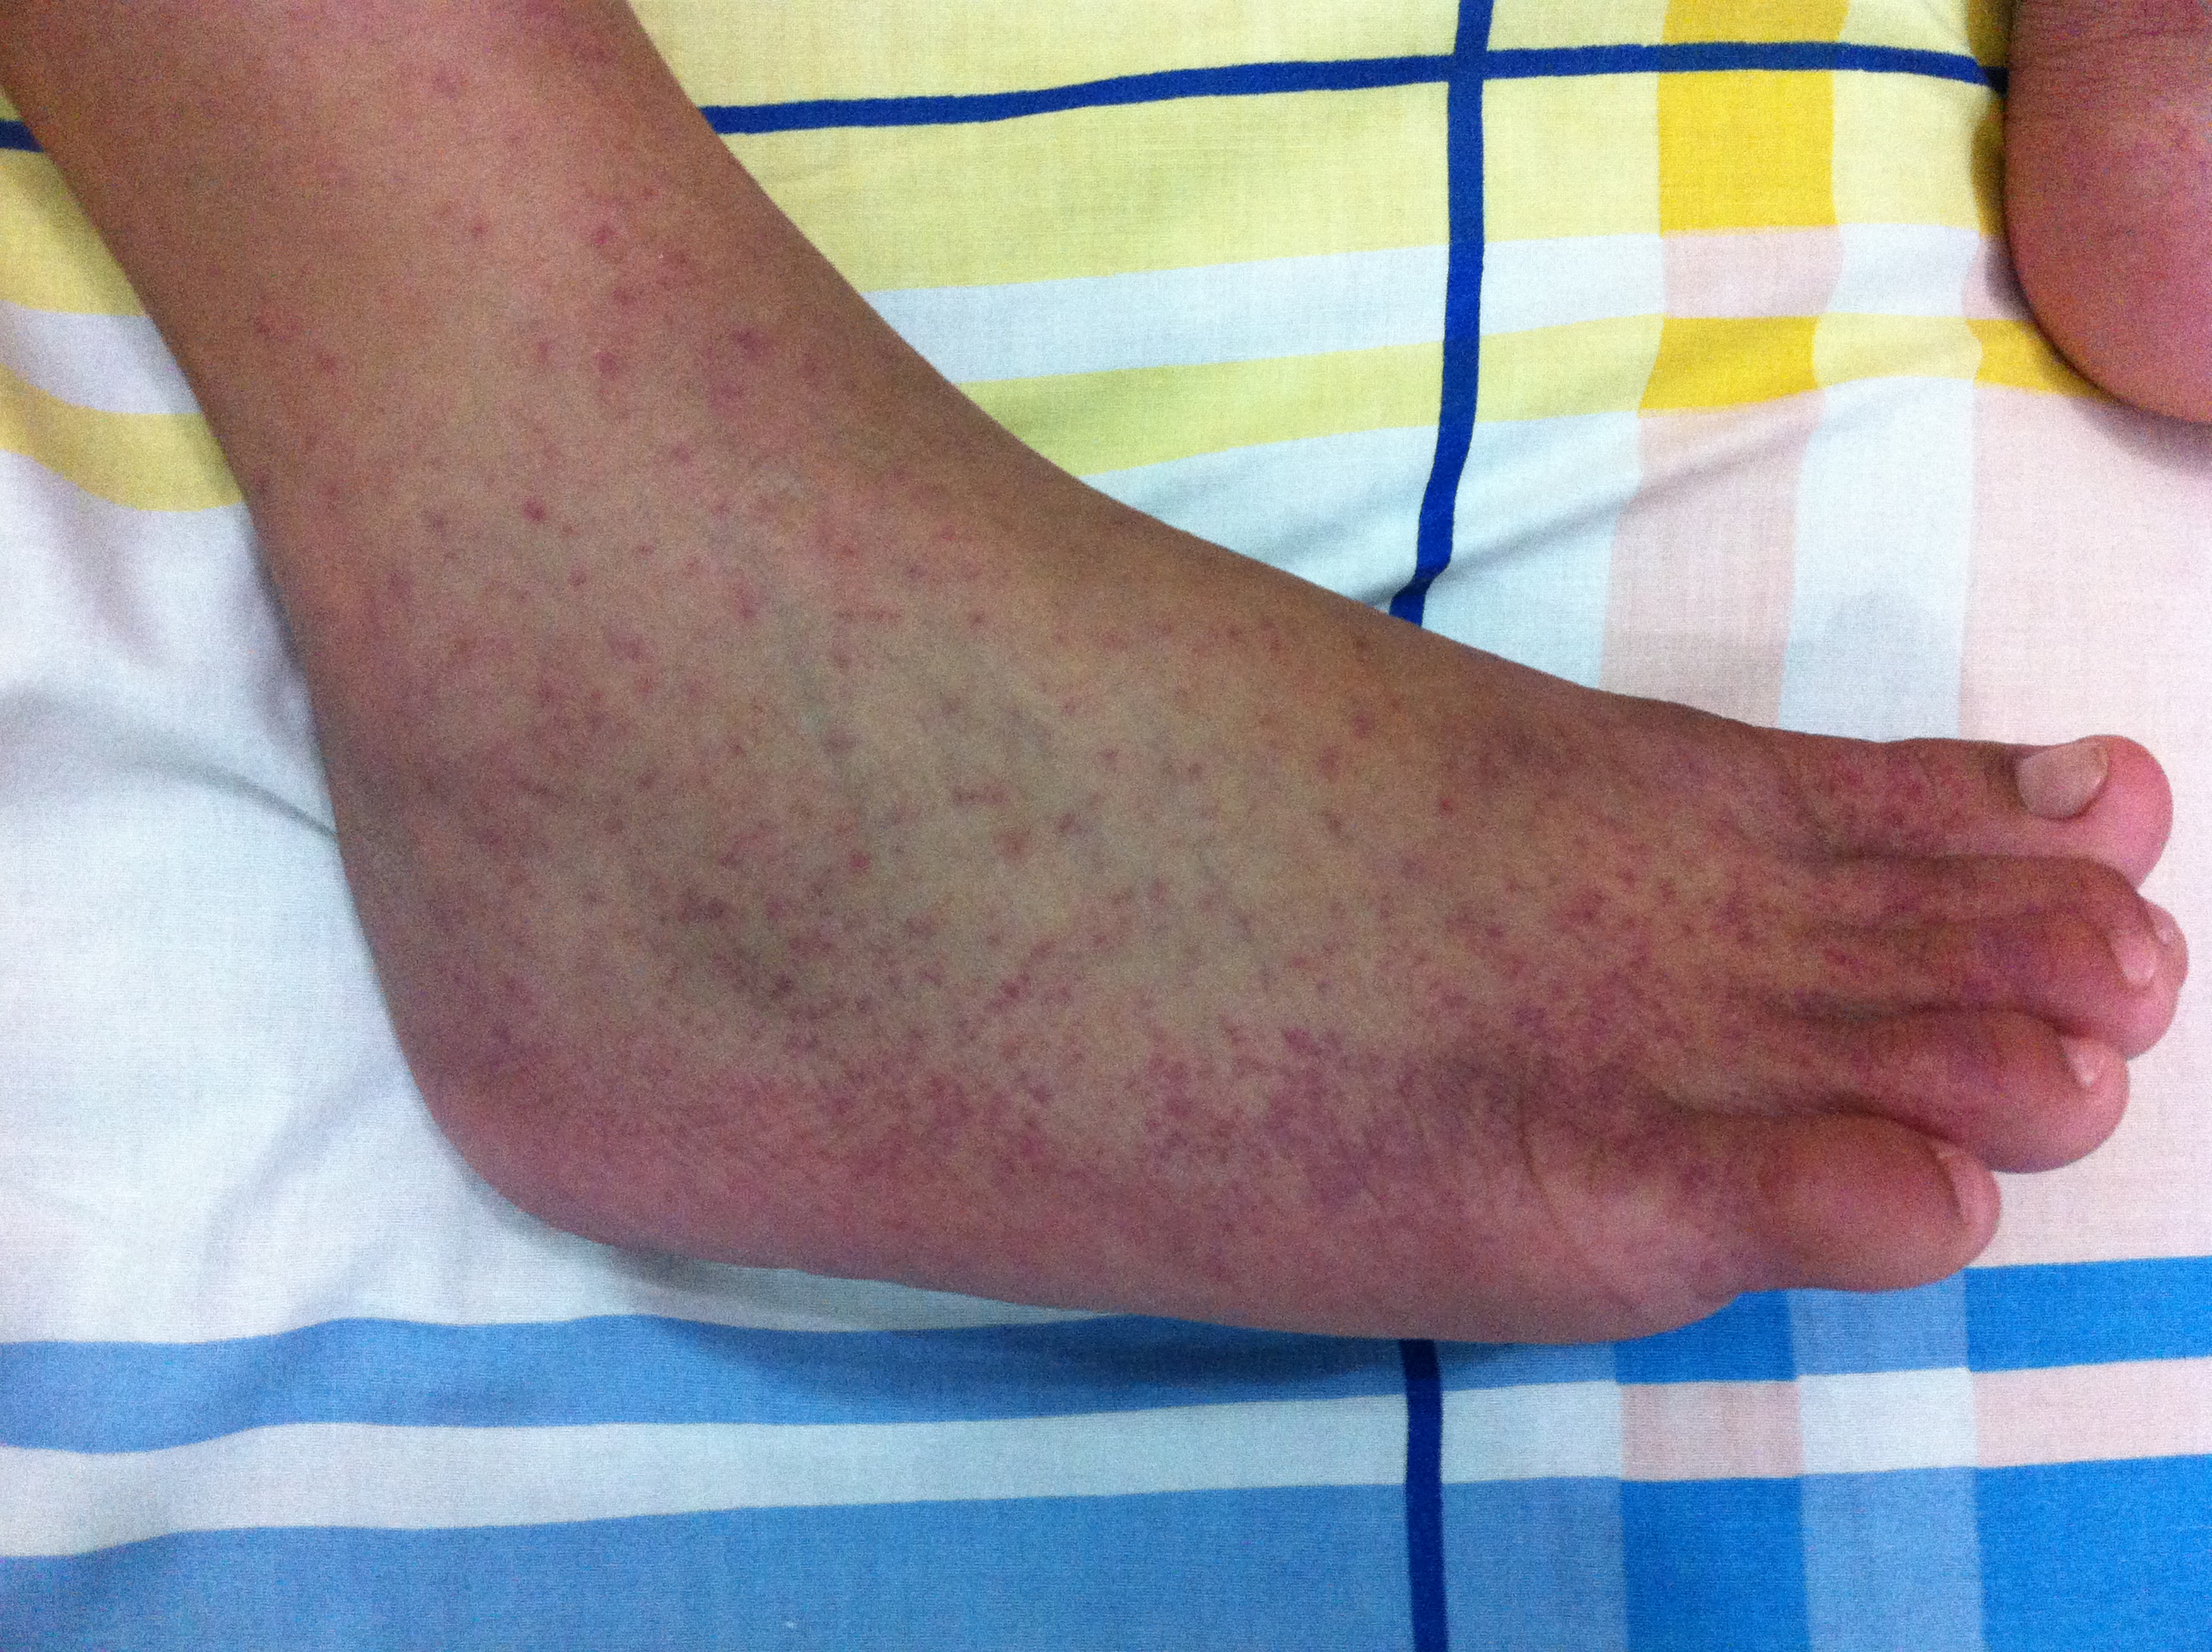 Maculopapular rash in the feet